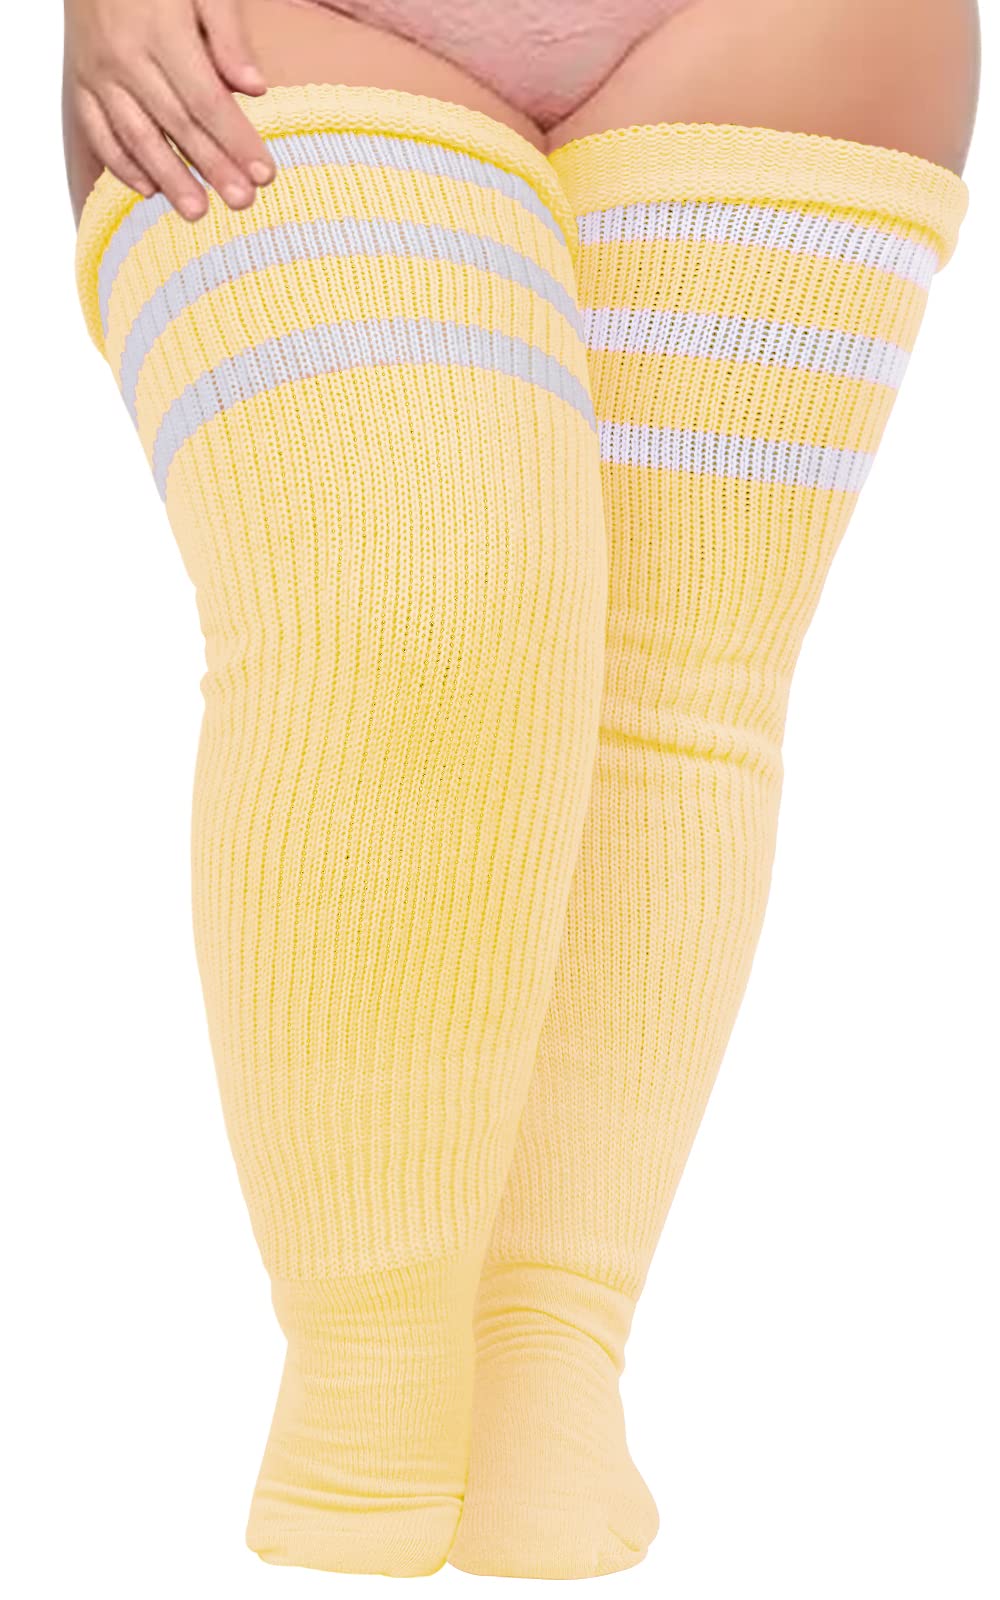 Plus Size Thigh High Socks Striped- Cream Yellow & White - Moon Wood